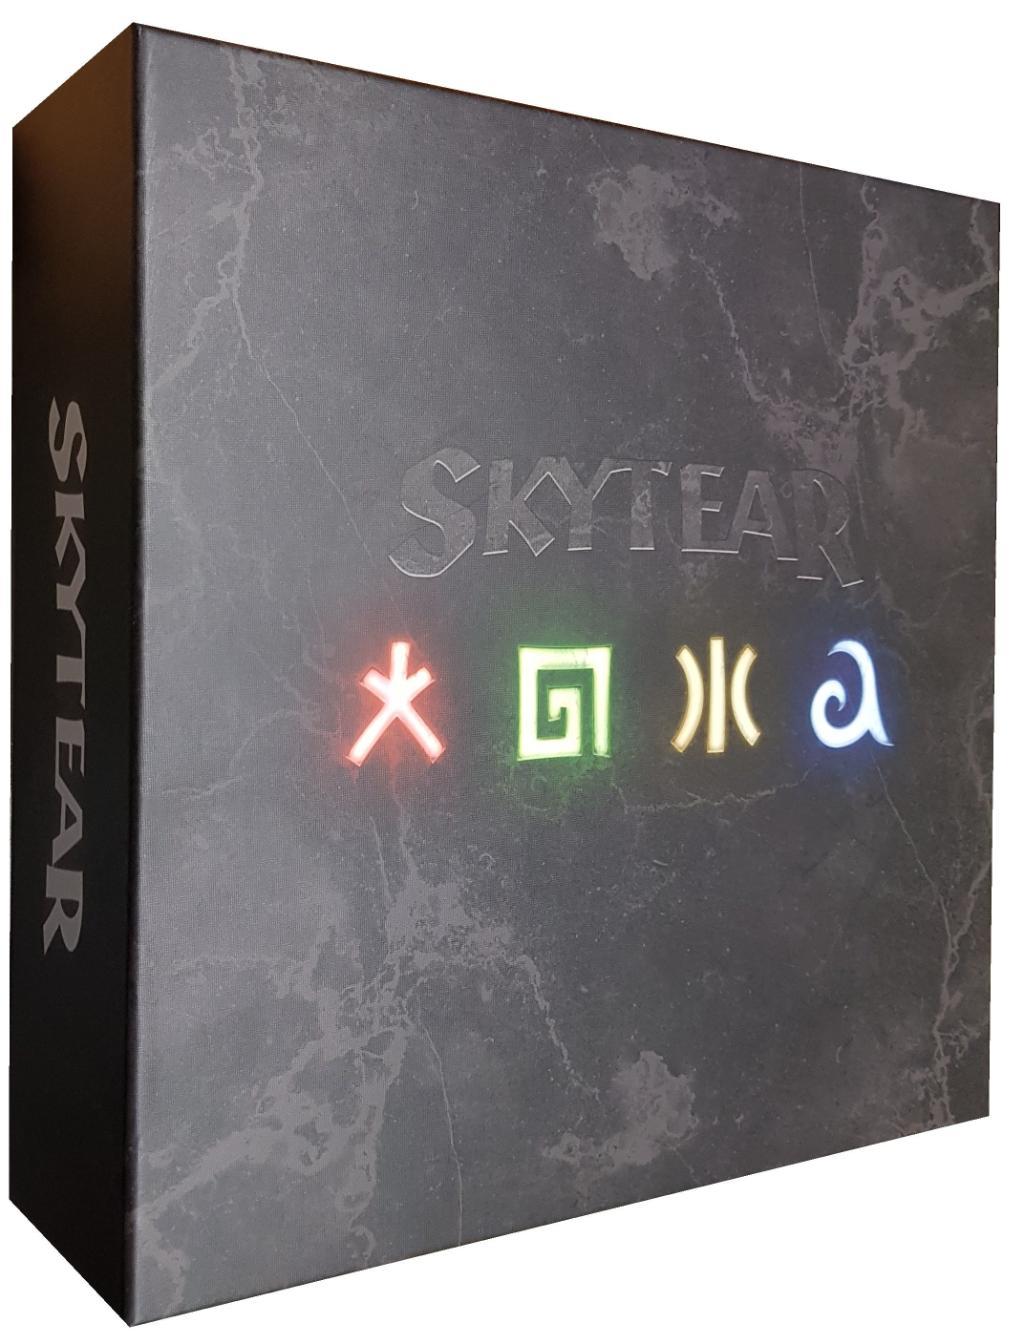 Skytear - édition Kickstarter